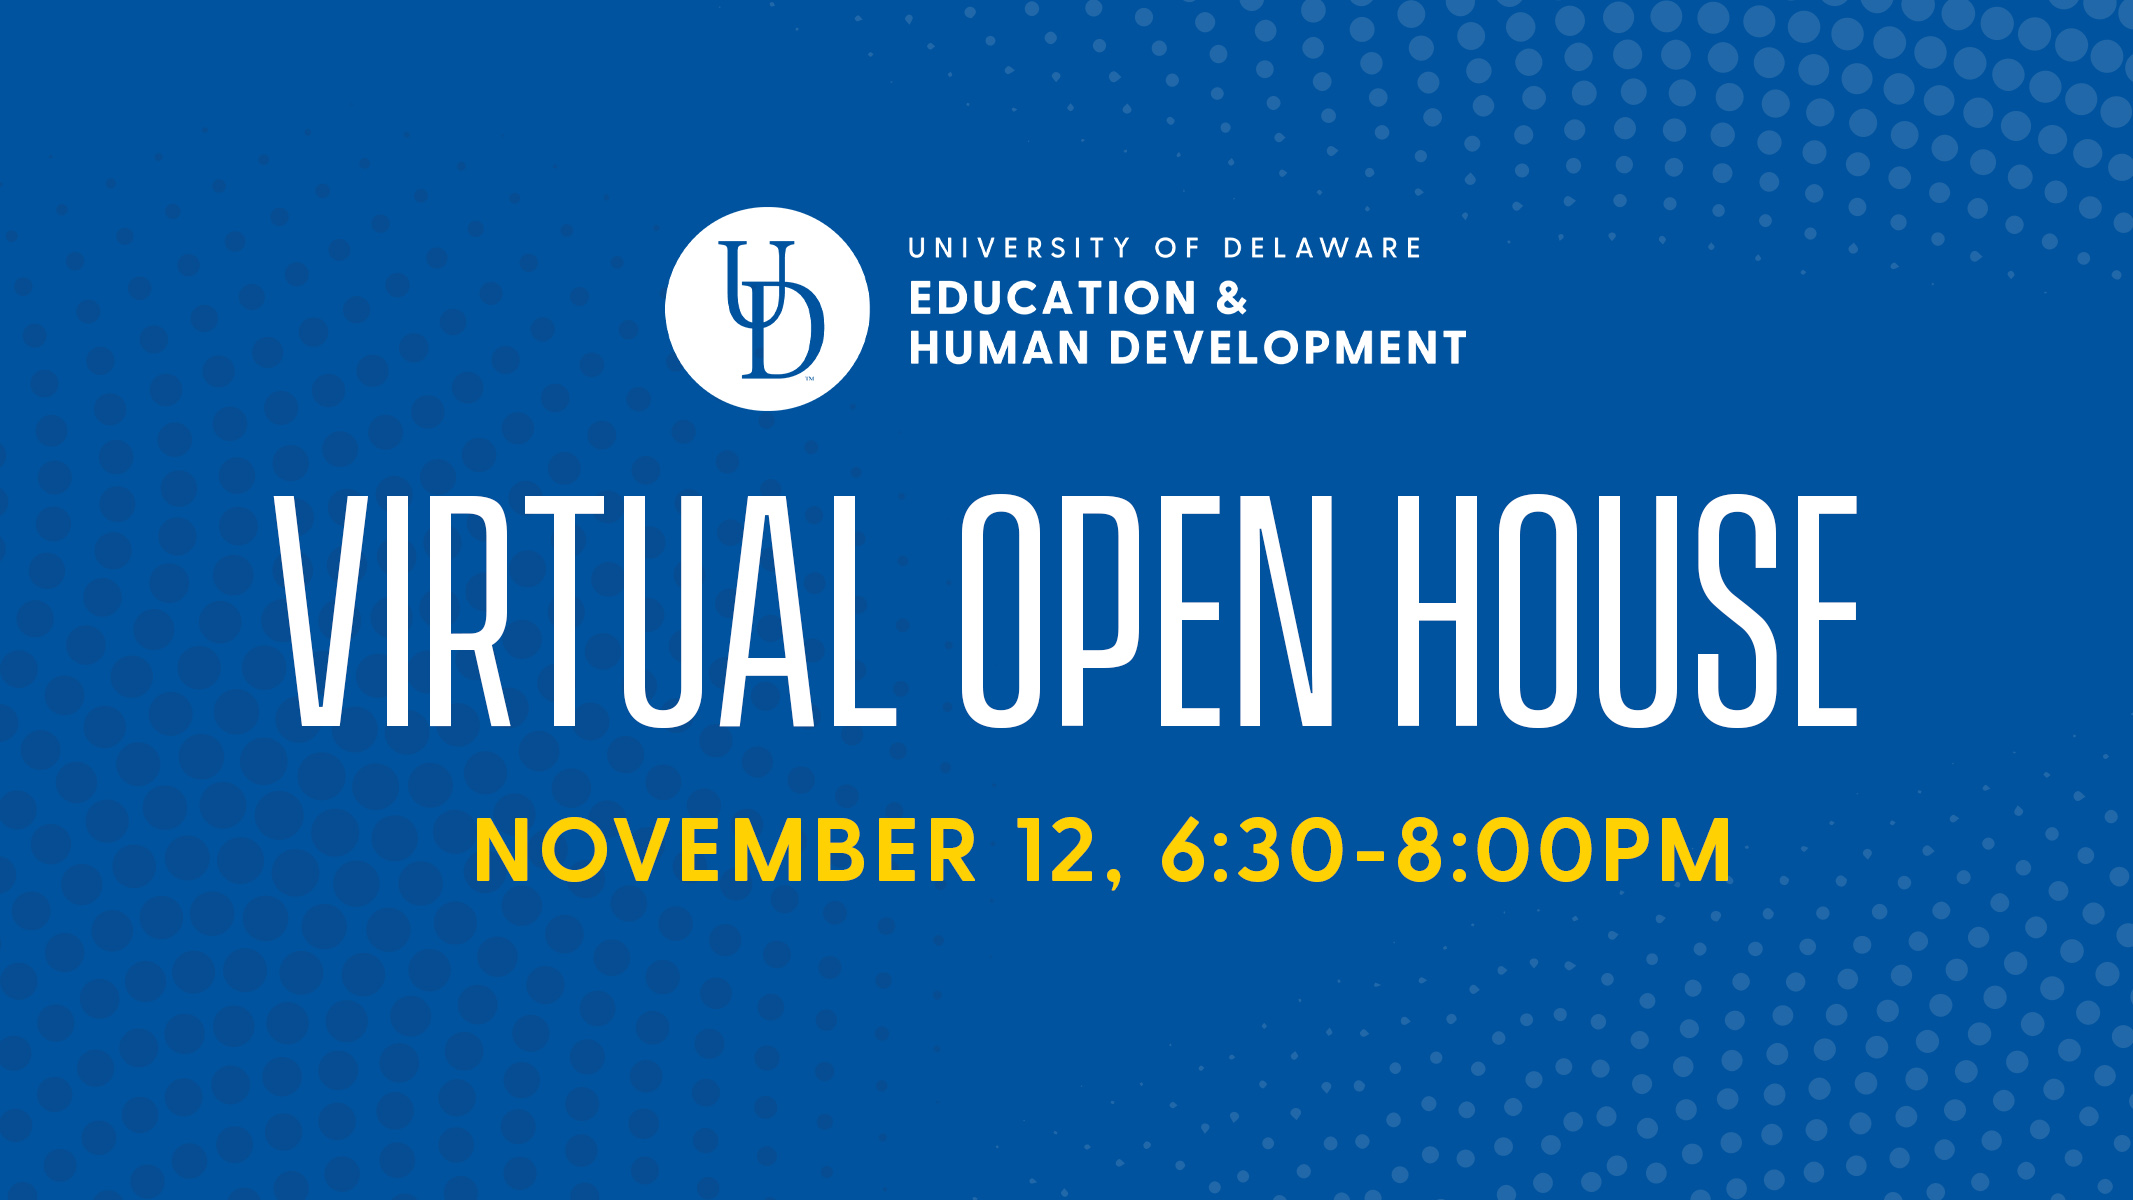 Virtual Open House on November 12